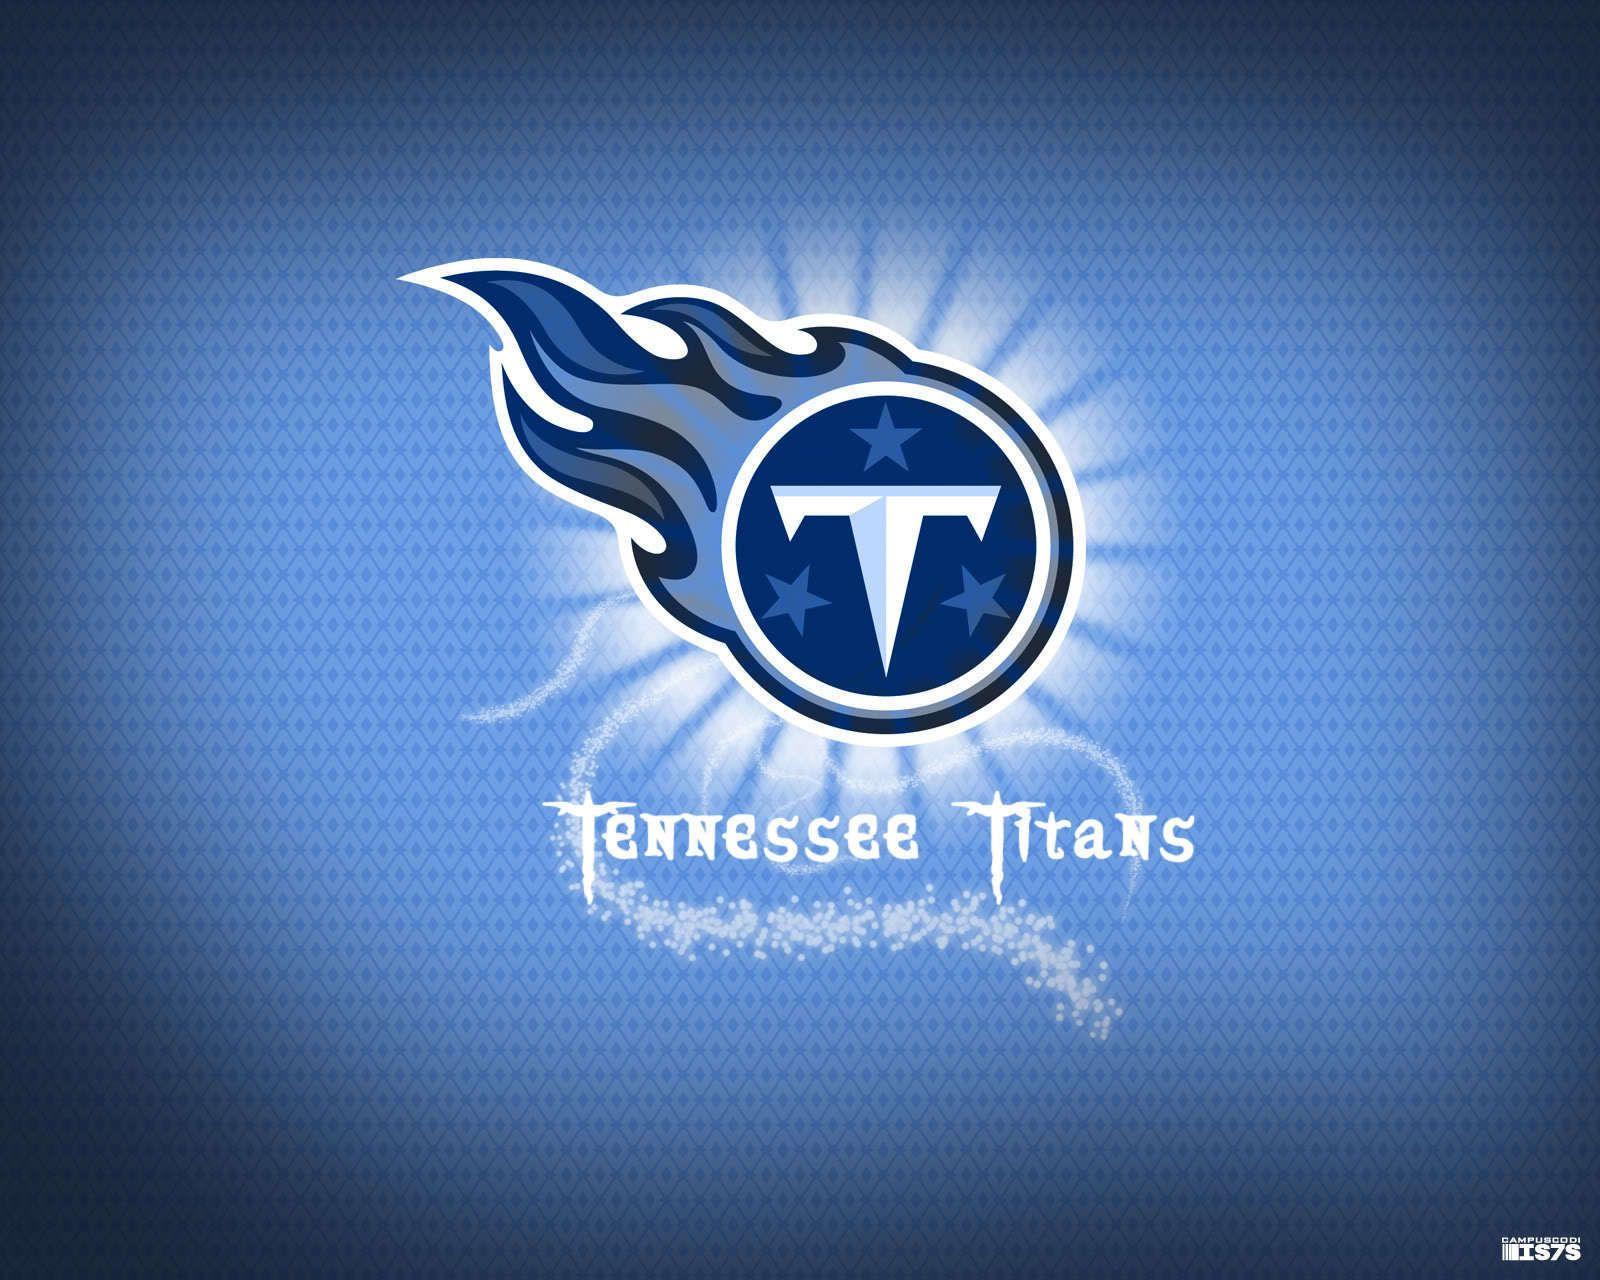 Download Tennessee Titans Logo NFL Wallpaper HD. Tennessee titans logo, Nfl football wallpaper, Tennessee titans